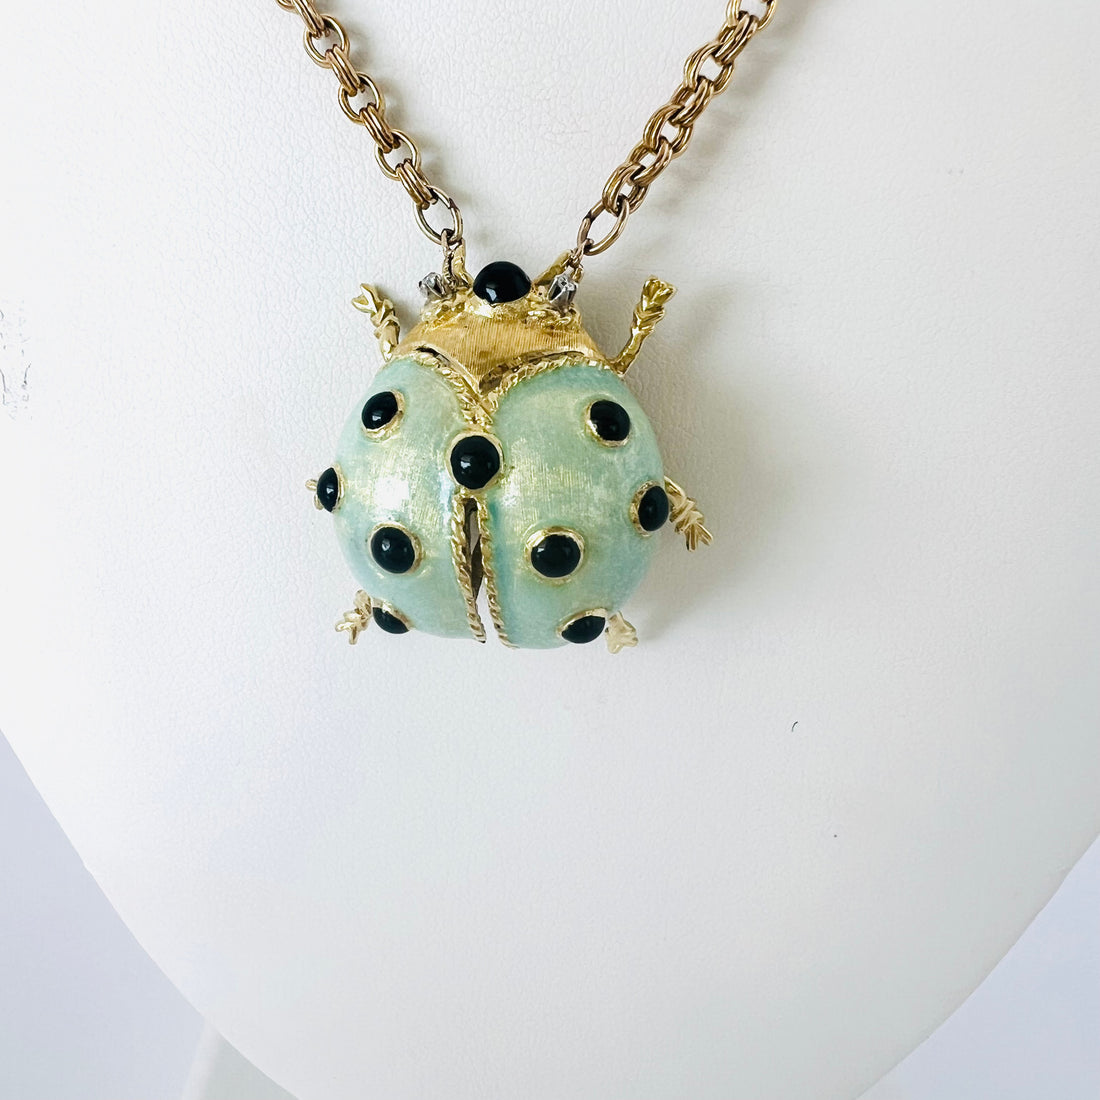 18k gold -filled chain necklace with vintage mint green enamel/diamond eye lady bug pendant